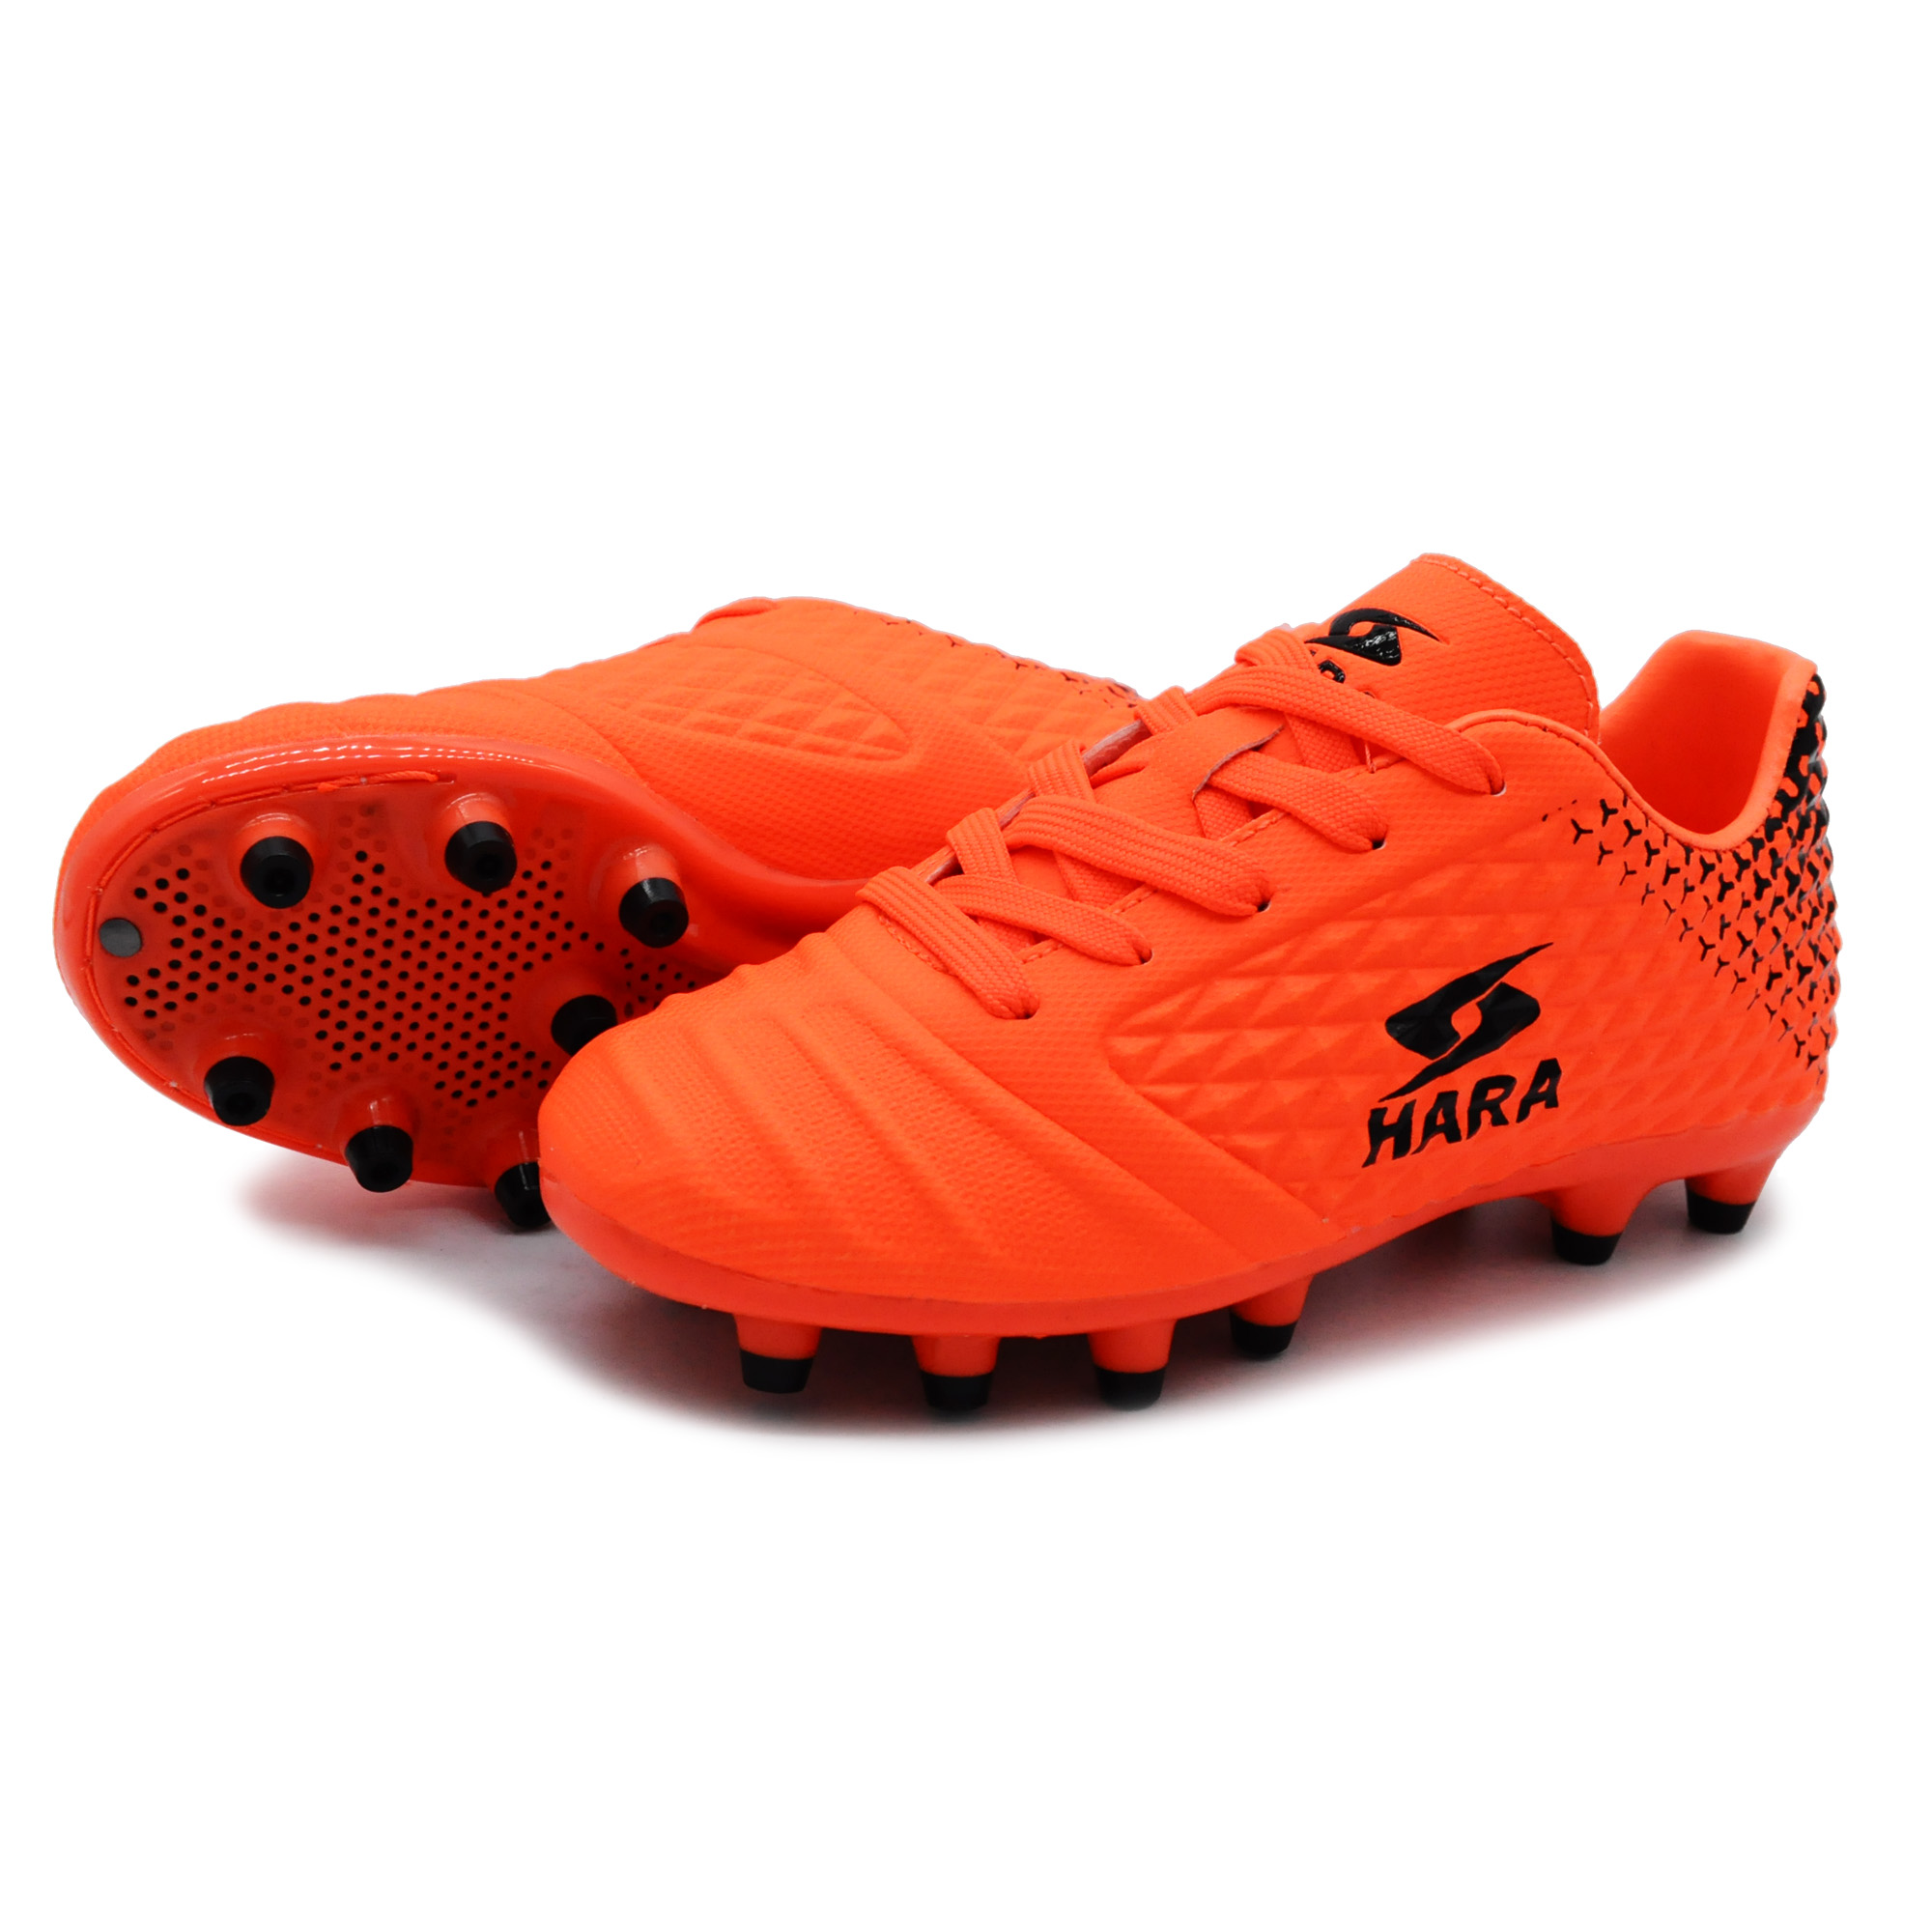 Hara Sports รองเท้าสตั๊ดเด็ก รองเท้าฟุตบอลเด็ก รุ่น F14k สีส้ม. 